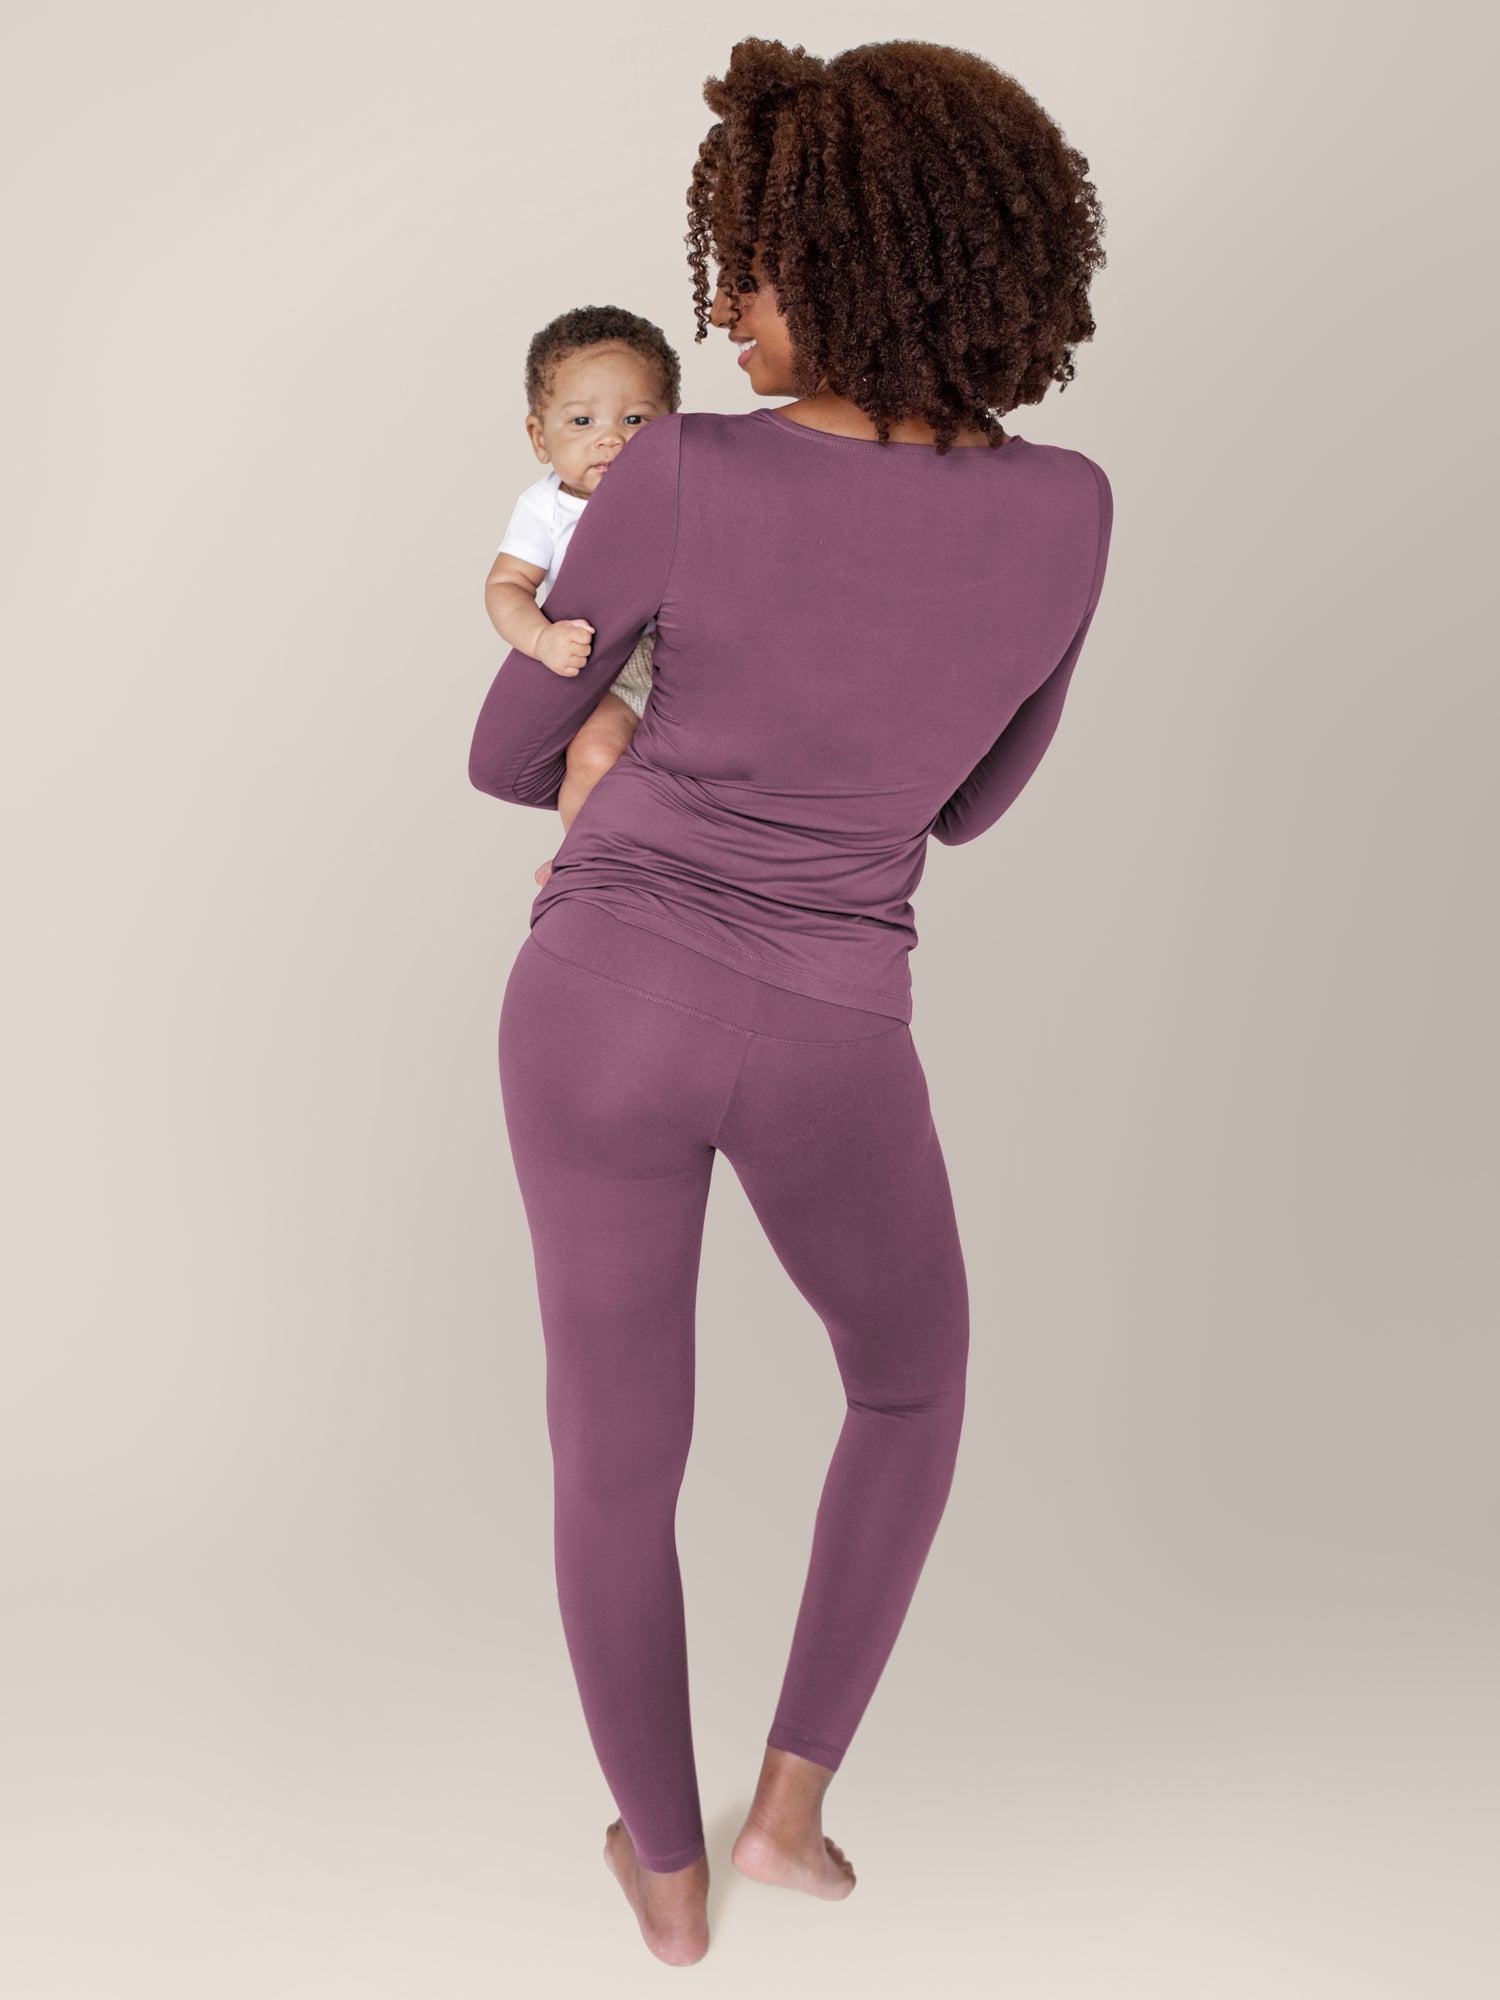 Model holding her baby on her hip wearing the Jane Nursing Pajama Set in Burgundy Plum.